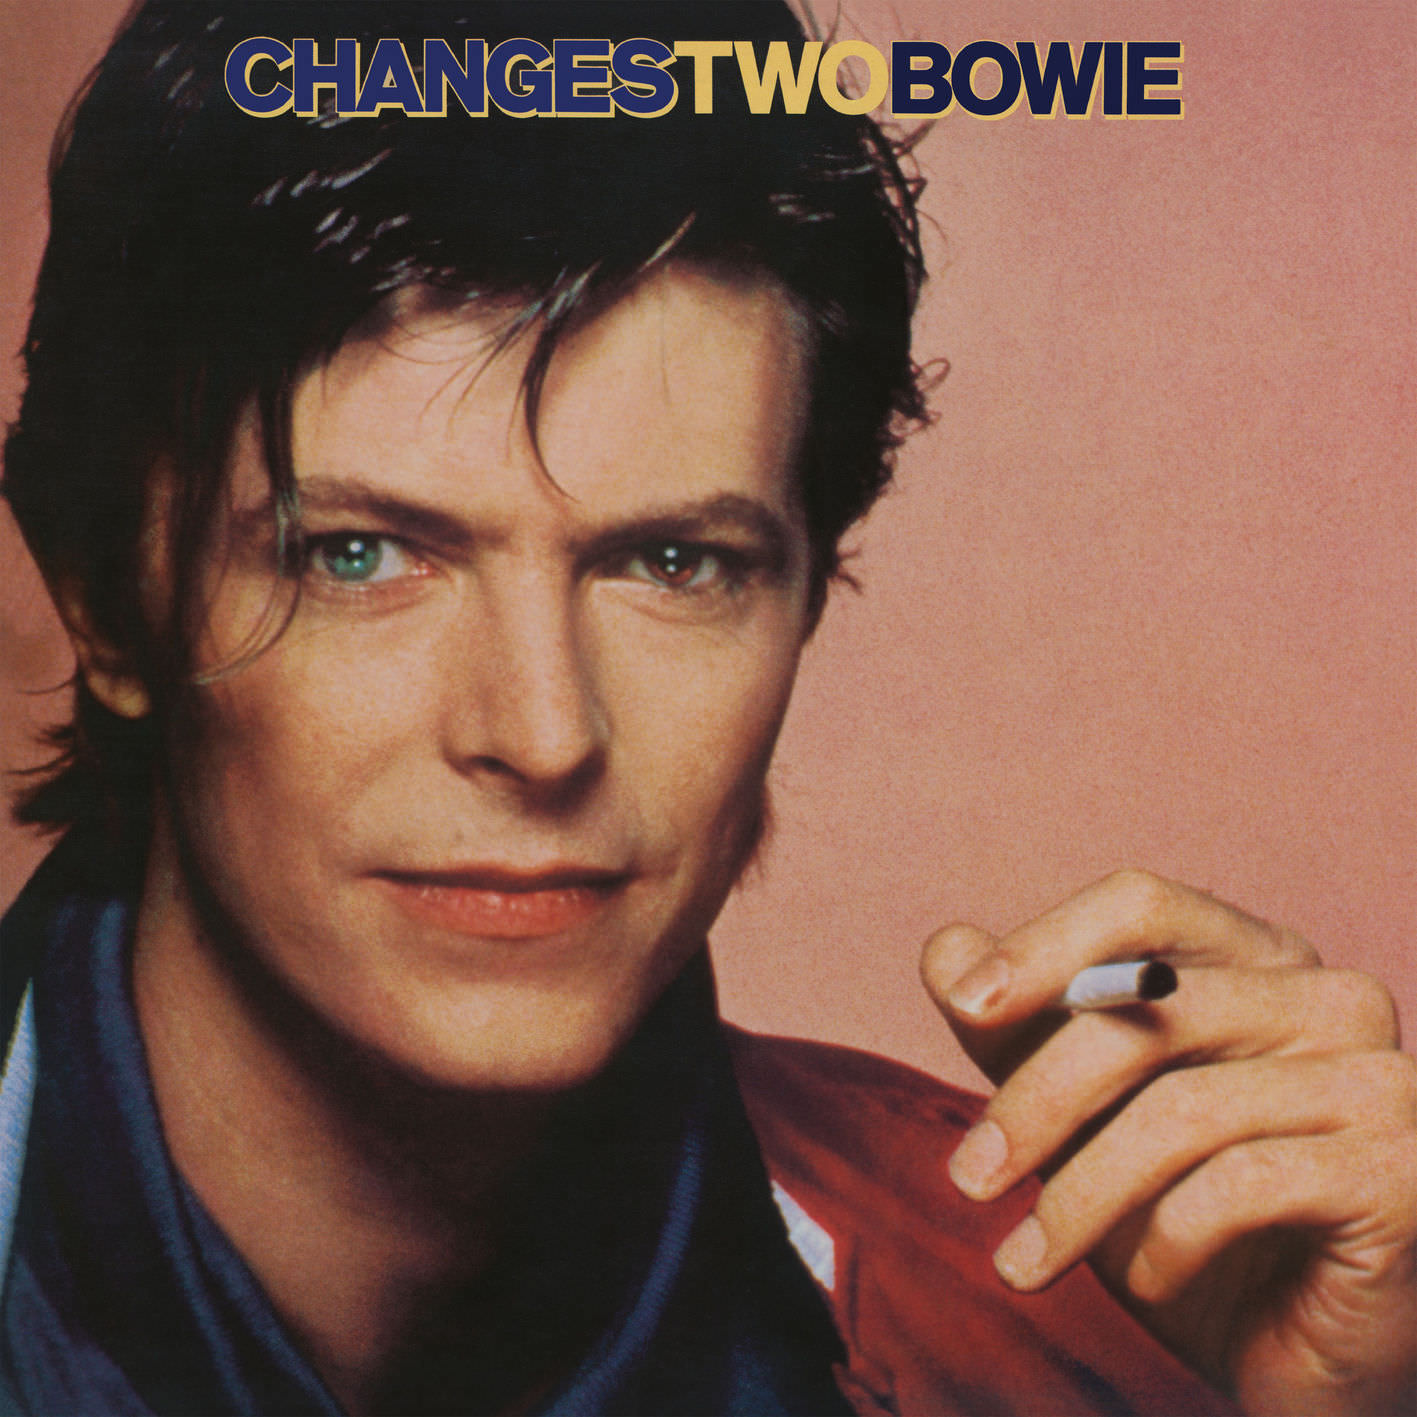 David Bowie – Changestwobowie (1981/2018) [HDTracks FLAC 24bit/192kHz]